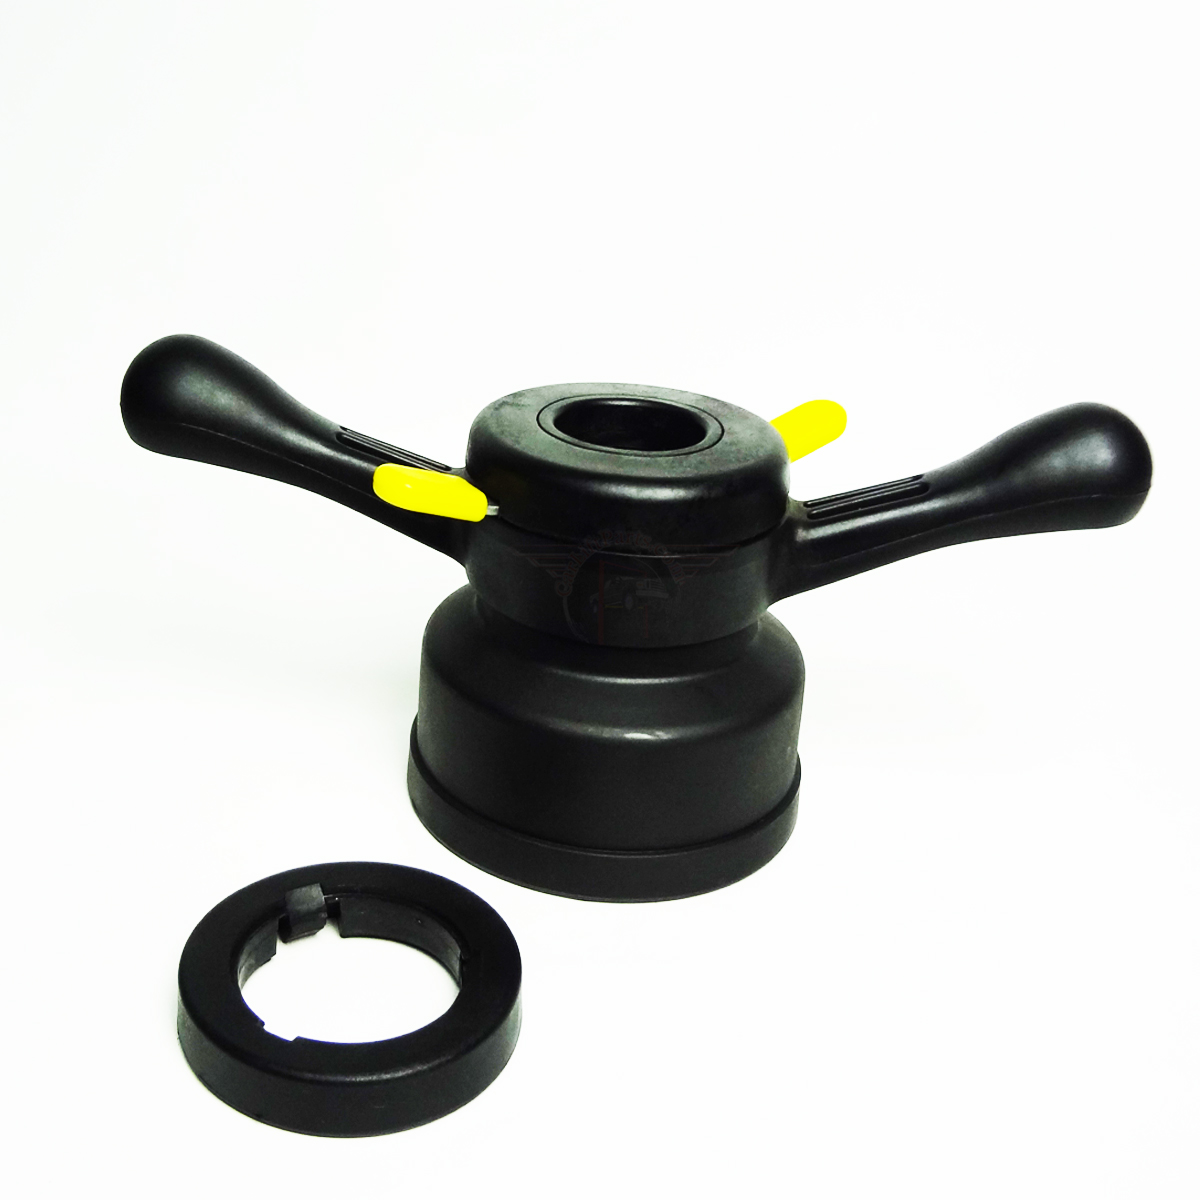 Accuturn & Coats Wheel Balancer 28mm Shaft Quick Clamp Wing Nut Set